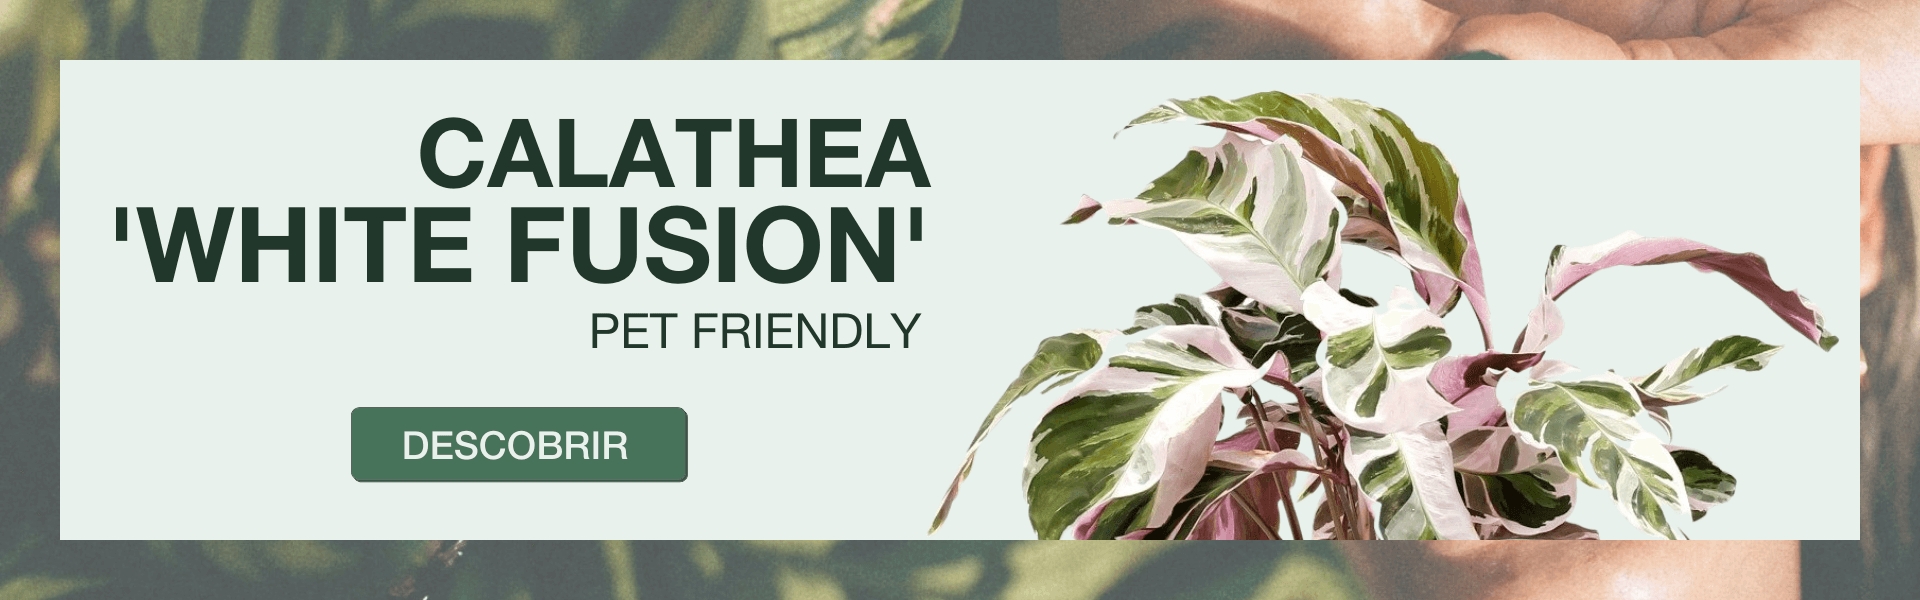 calathea white fusion | bioma plants